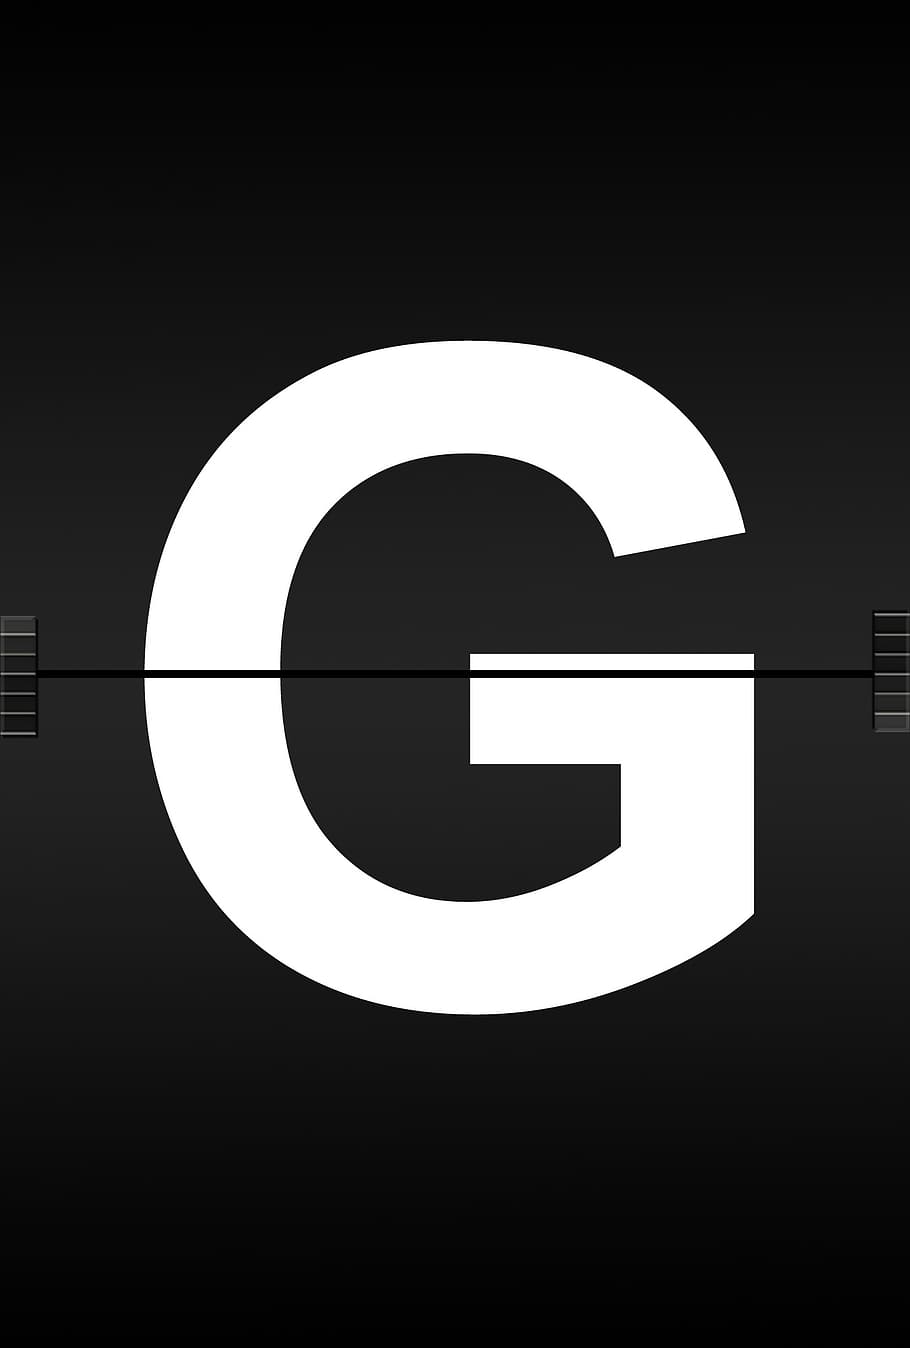 g logo, letters, abc, alphabet, journal font, airport, scoreboard, ad, railway station, board